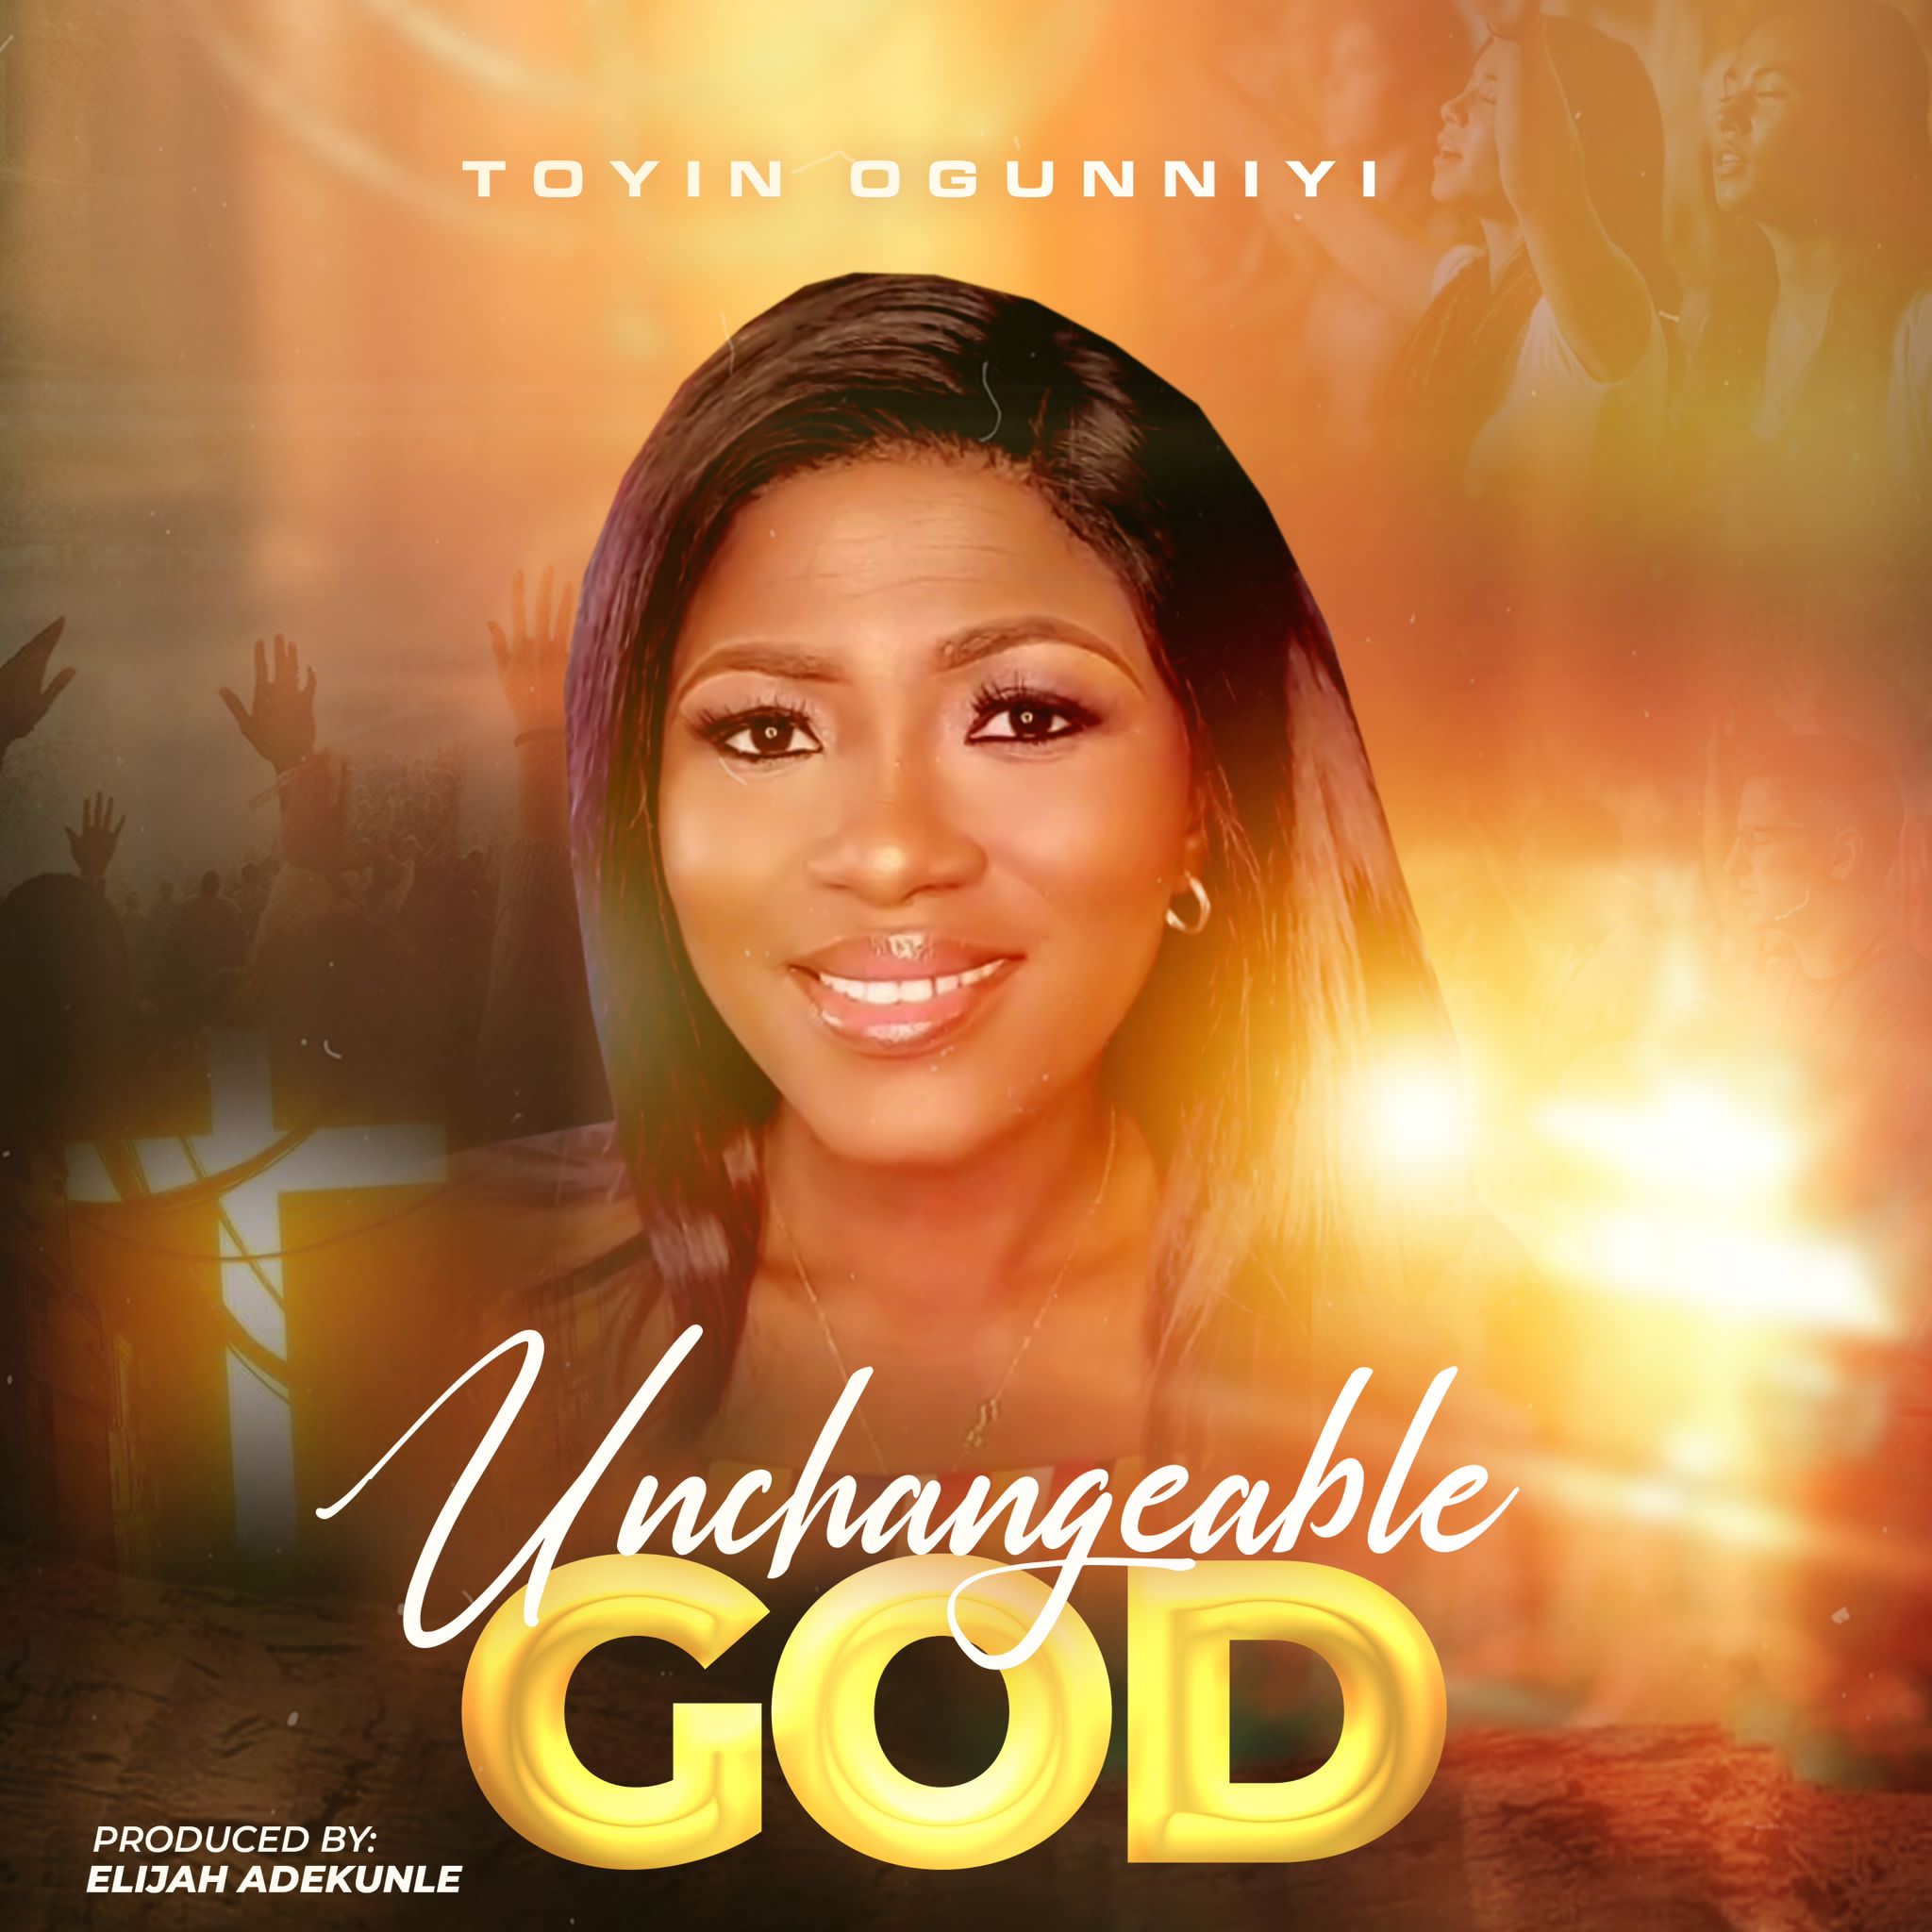 Unchangeable God by Toyin Ogunniyi